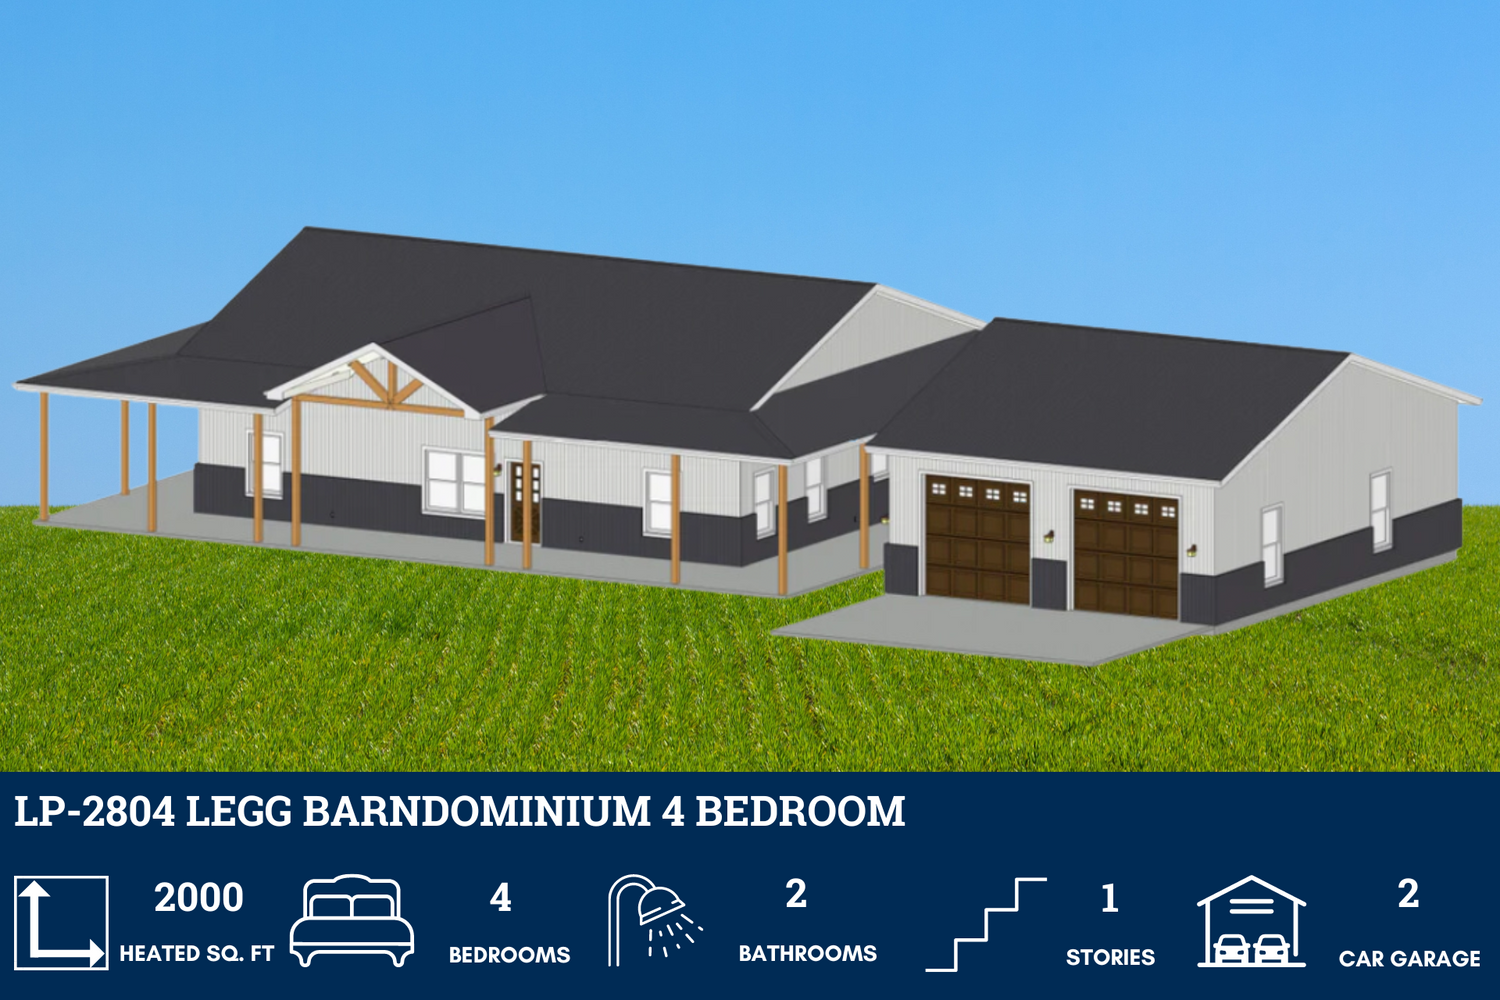 4 Bedroom Barndominium House Plans